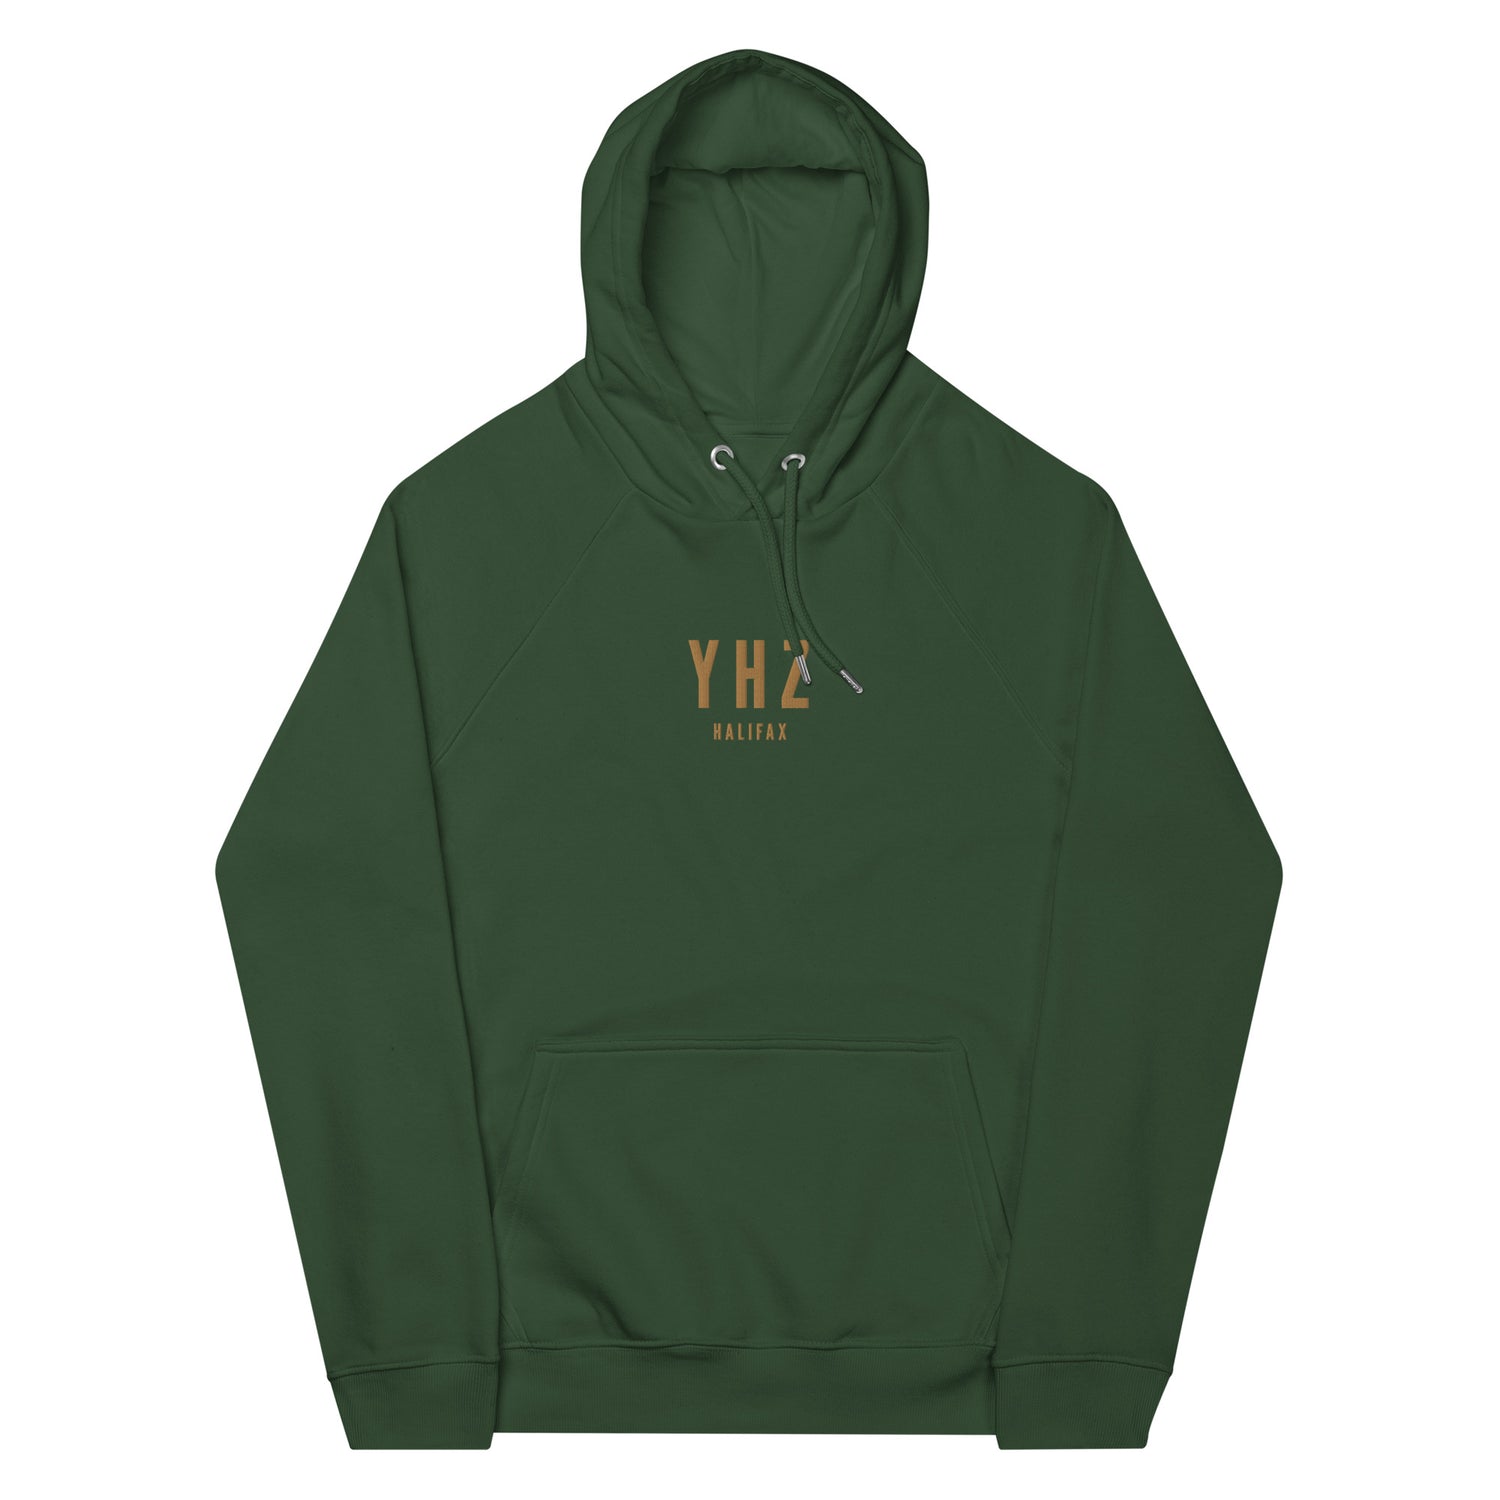 Halifax Nova Scotia Hoodies and Sweatshirts • YHZ Airport Code